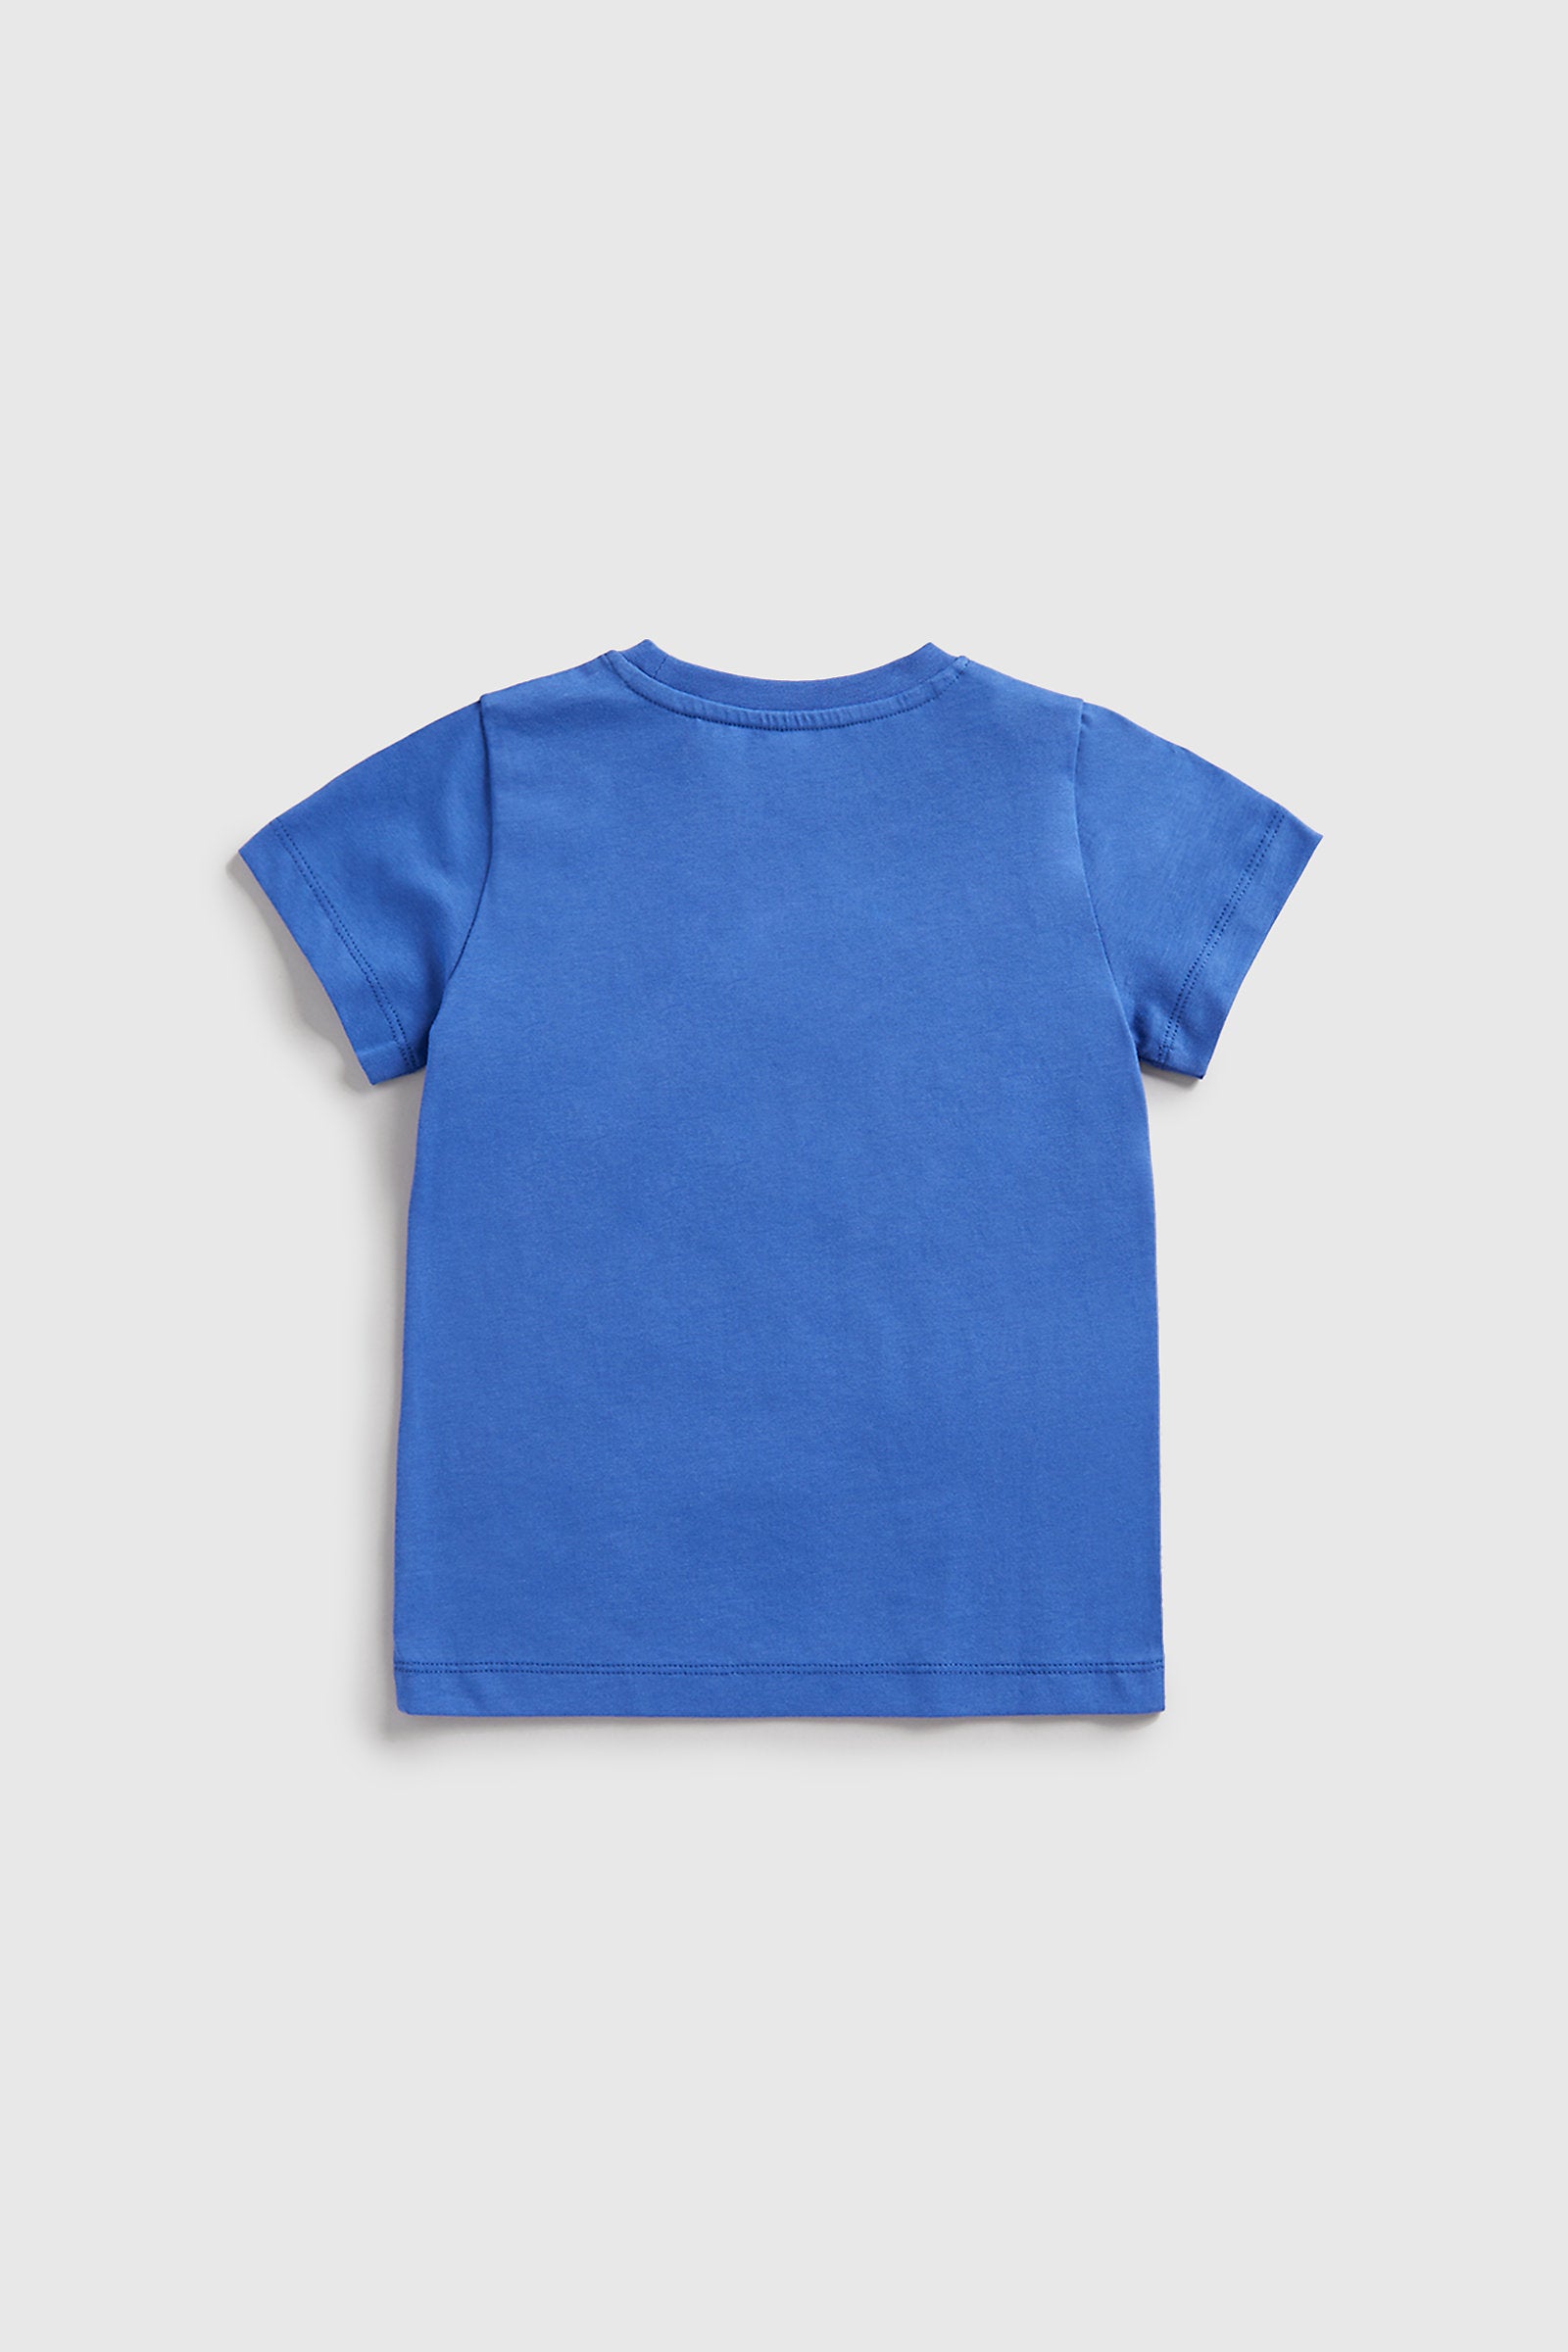 Mothercare Winner T-Shirt